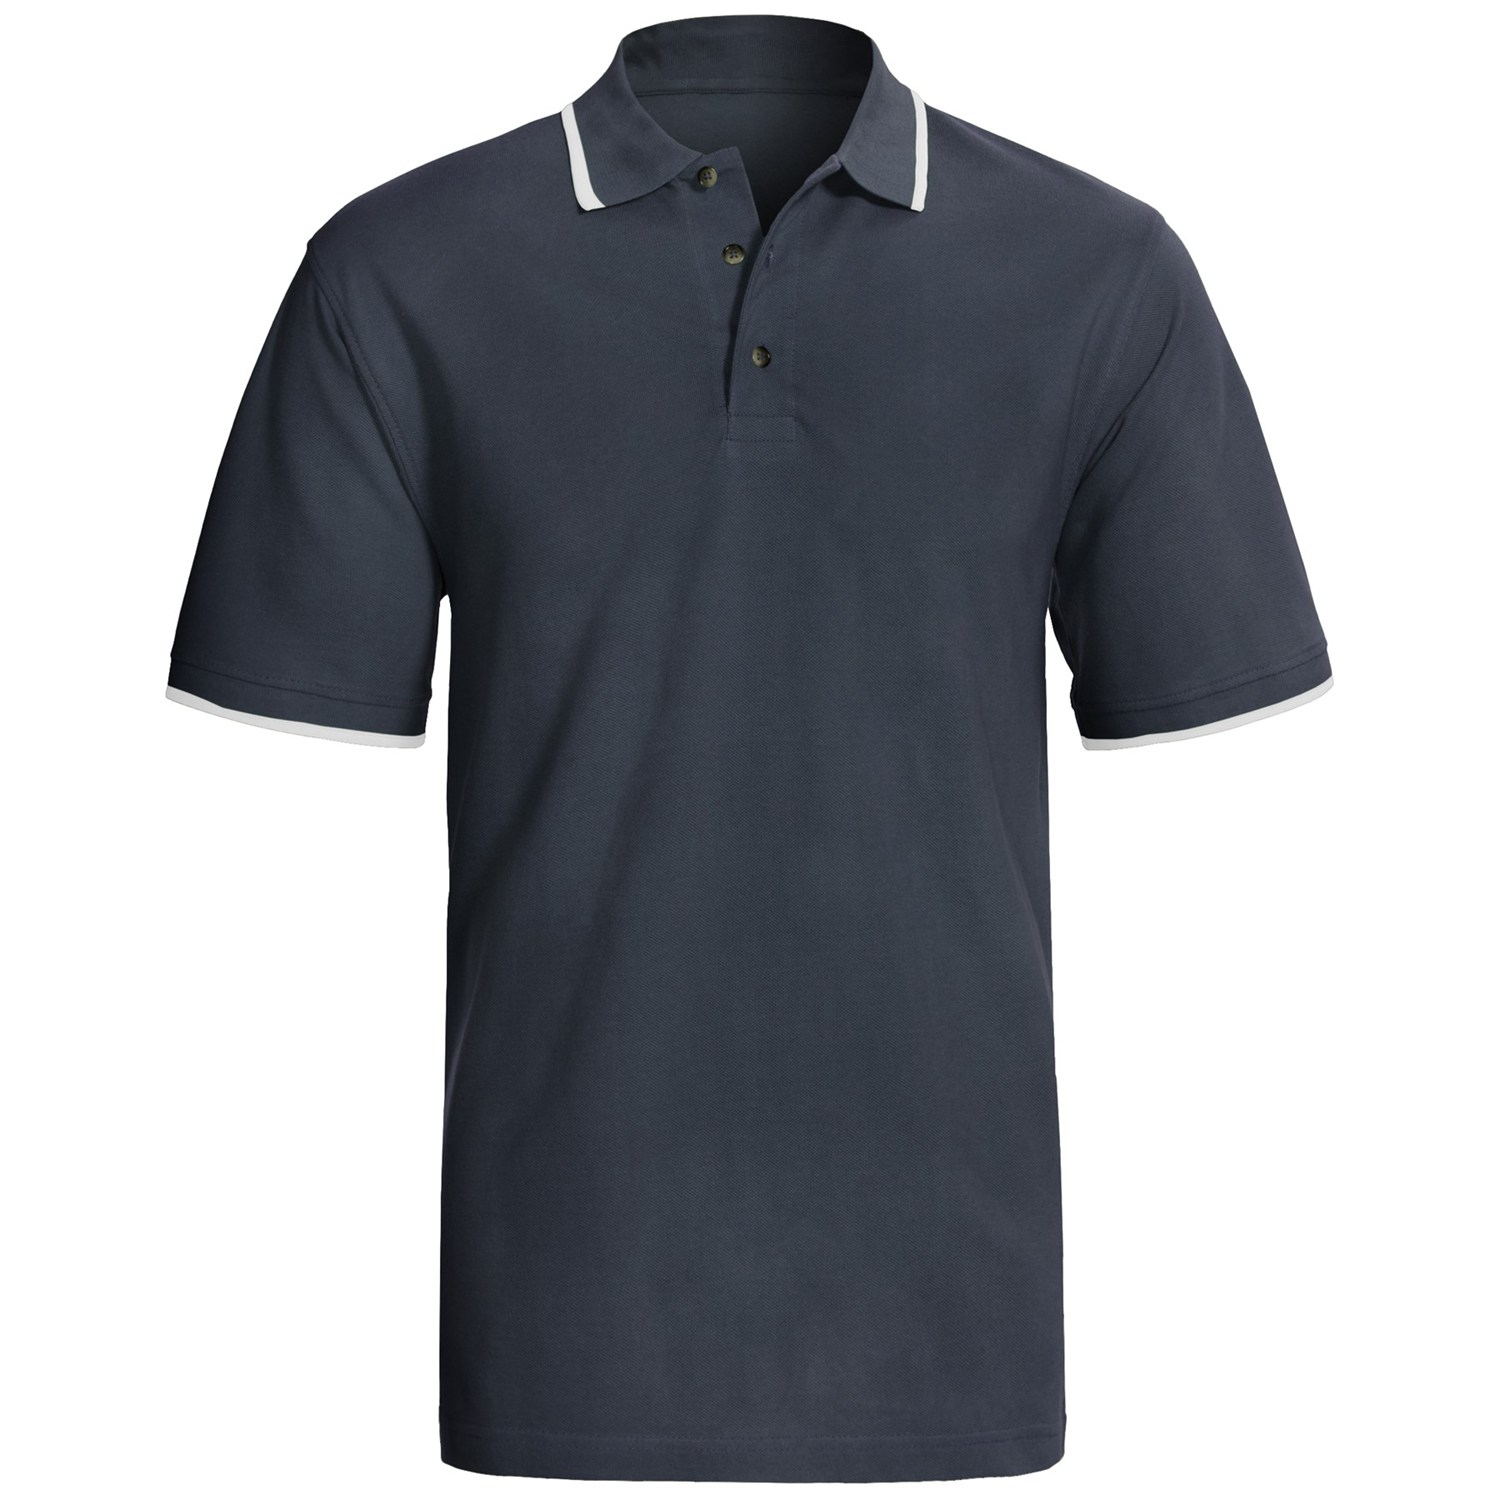 Contrast Collar Polo Shirt - Short Sleeve (For Men) - Save 70